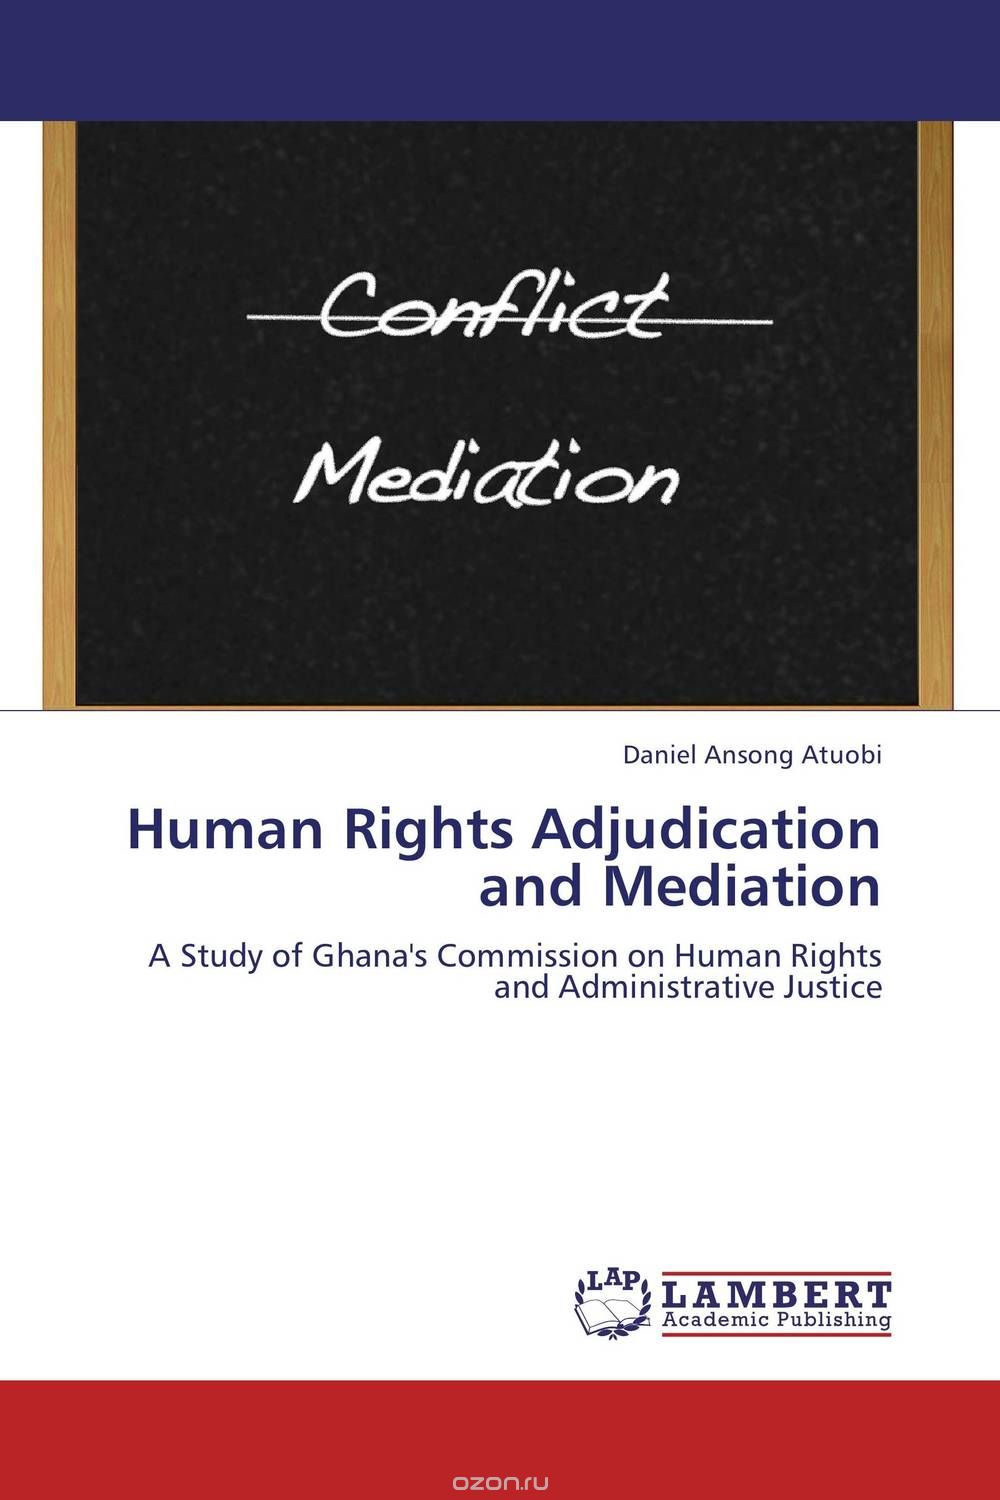 Human Rights Adjudication and Mediation